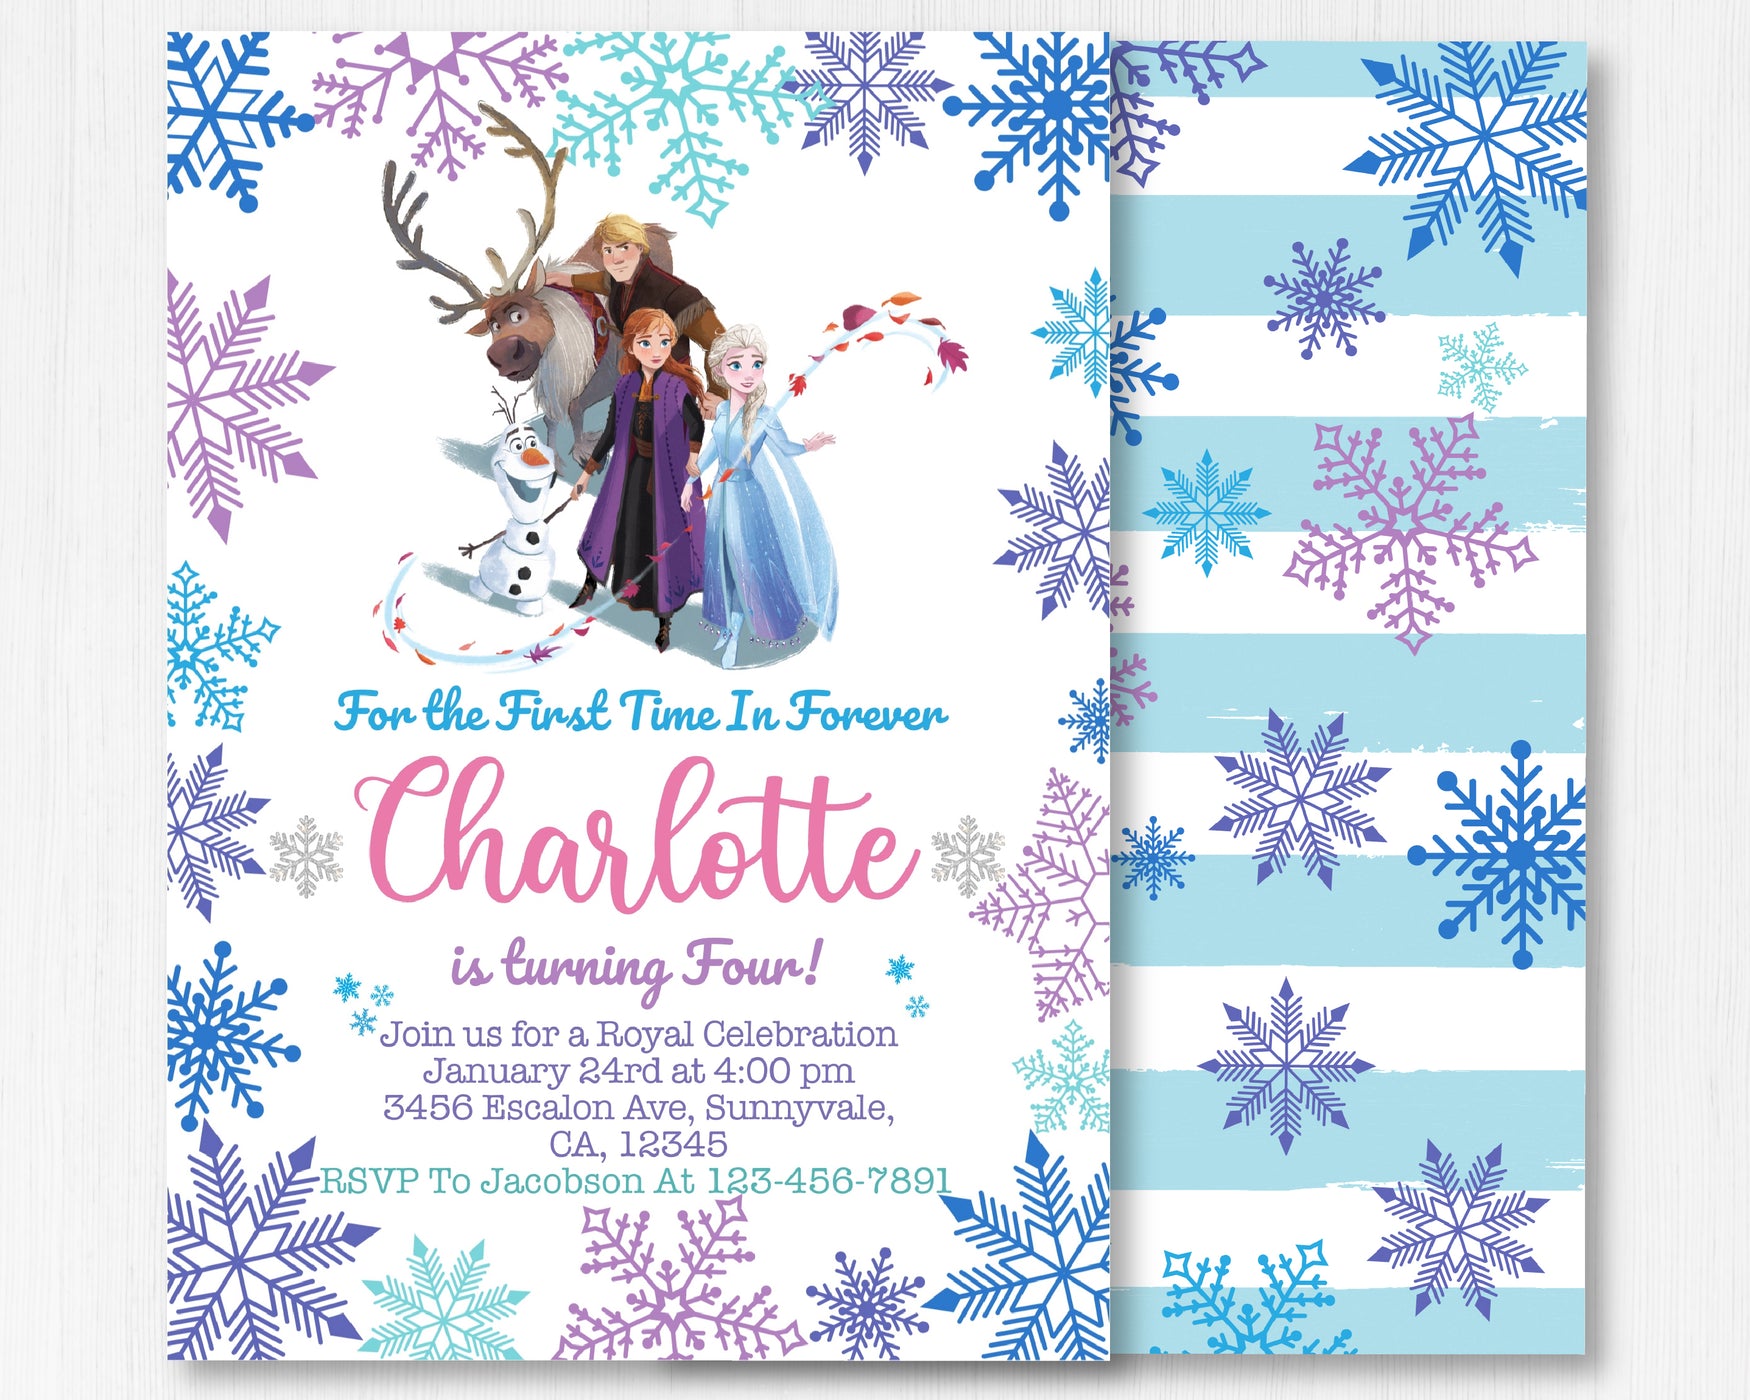 Frozen Birthday Invitation Template | Editable | Printable | Instant Download